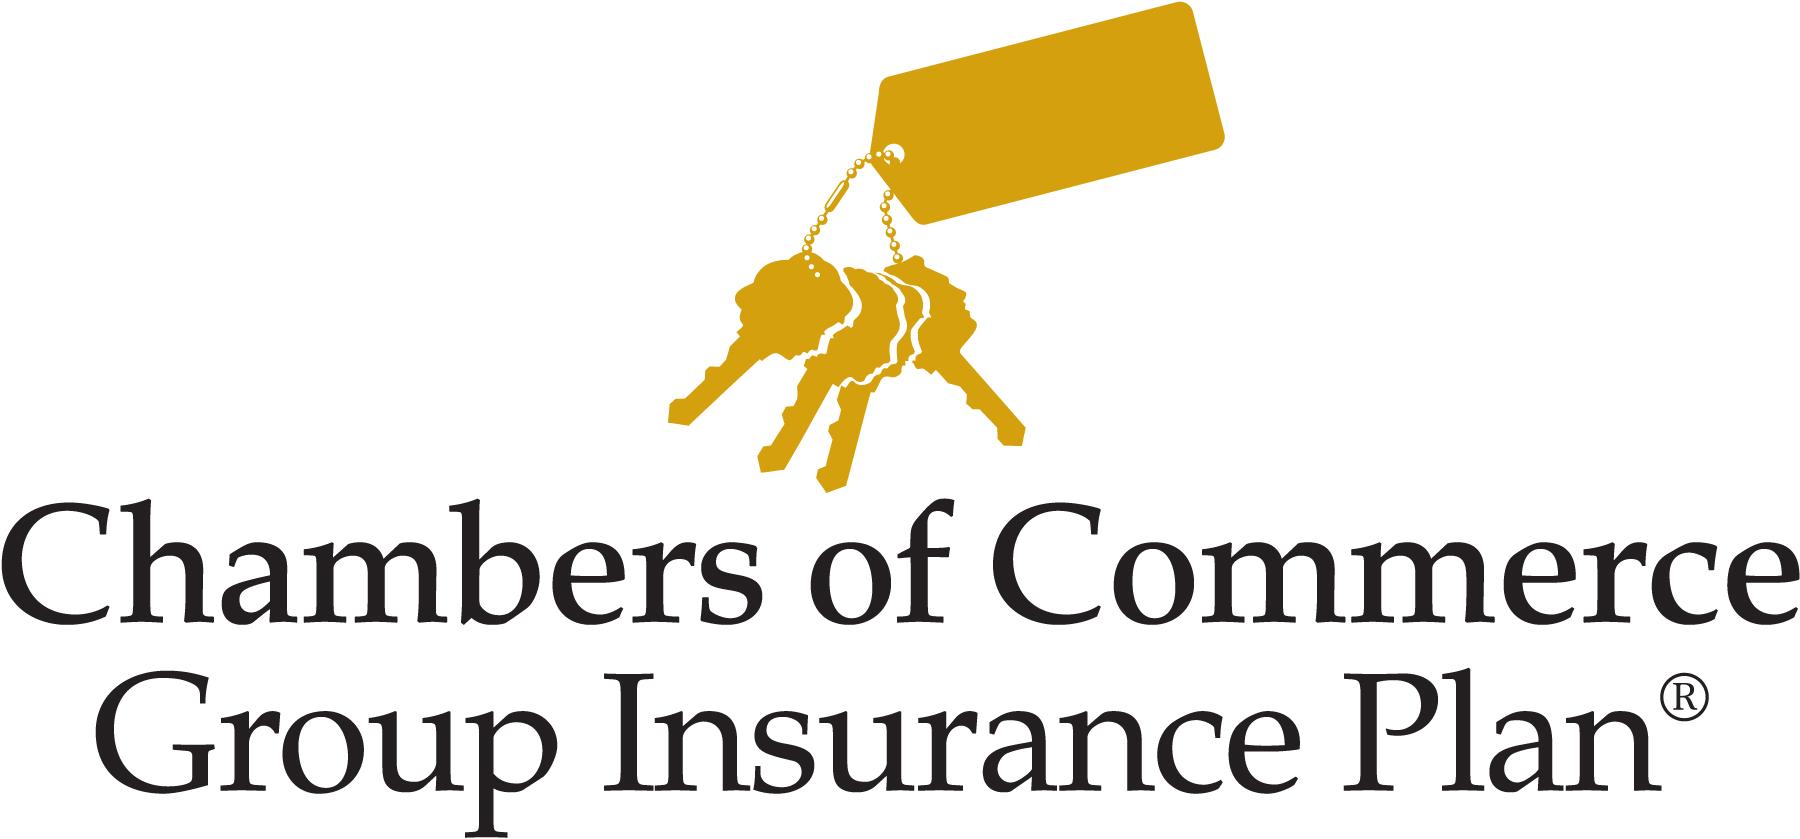 Chambers of Commerce Insurance